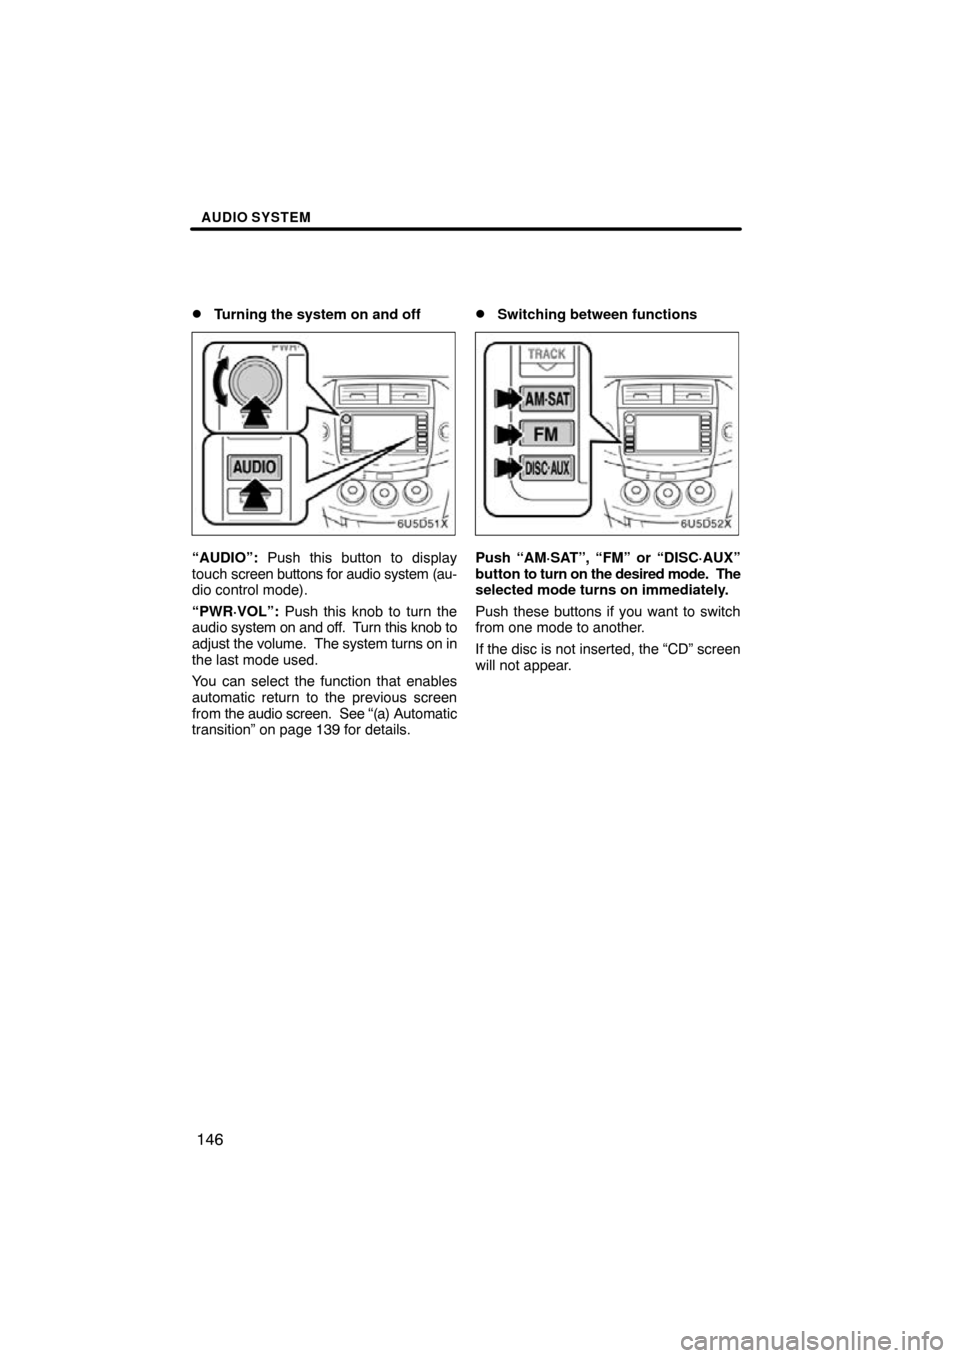 TOYOTA RAV4 2010 XA30 / 3.G Navigation Manual AUDIO SYSTEM
146

Turning the system on and off
“AUDIO”: 
Push this button to display
touch  screen buttons for audio system (au-
dio control mode).
“PWR·VOL”:  Push this knob to turn the
au